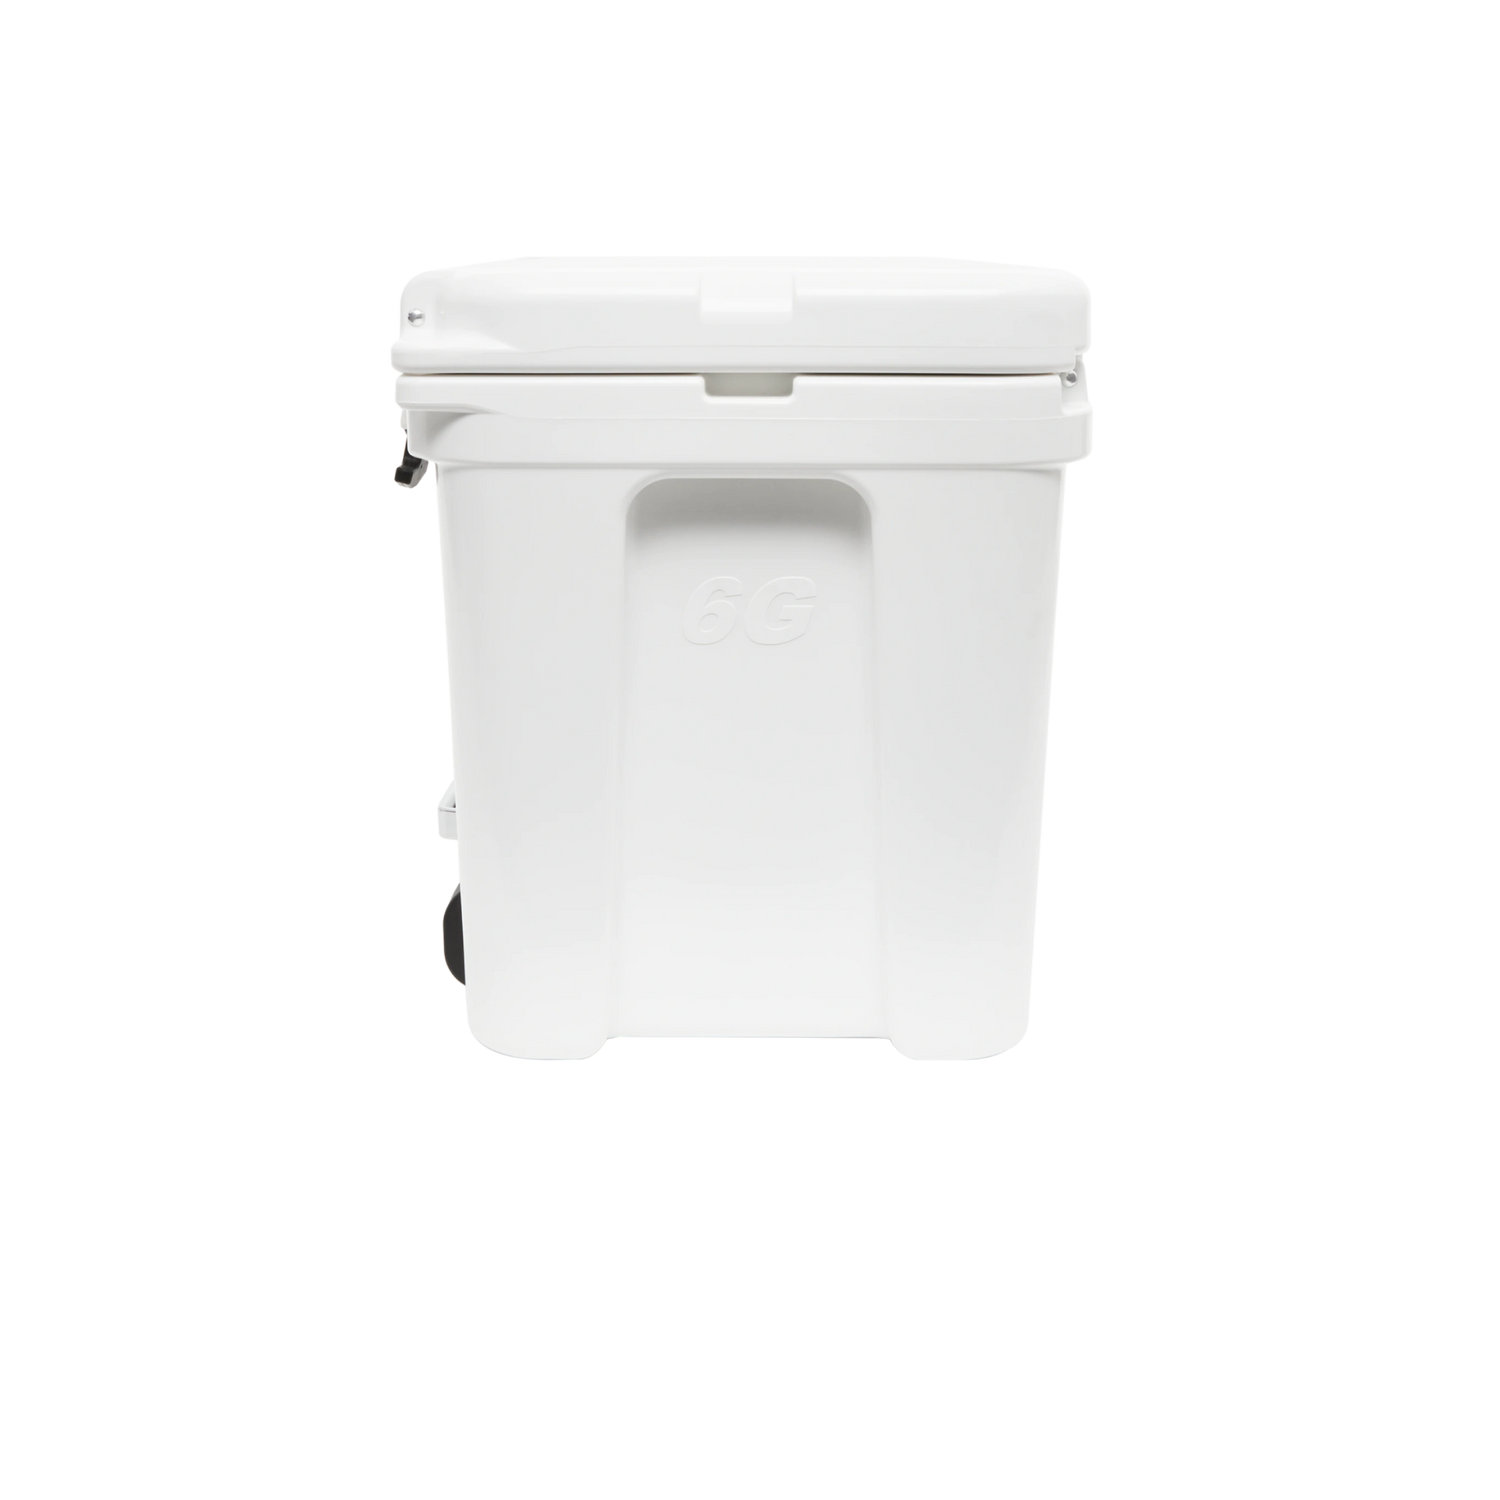 YETI Silo® 22.7 L Water Cooler White